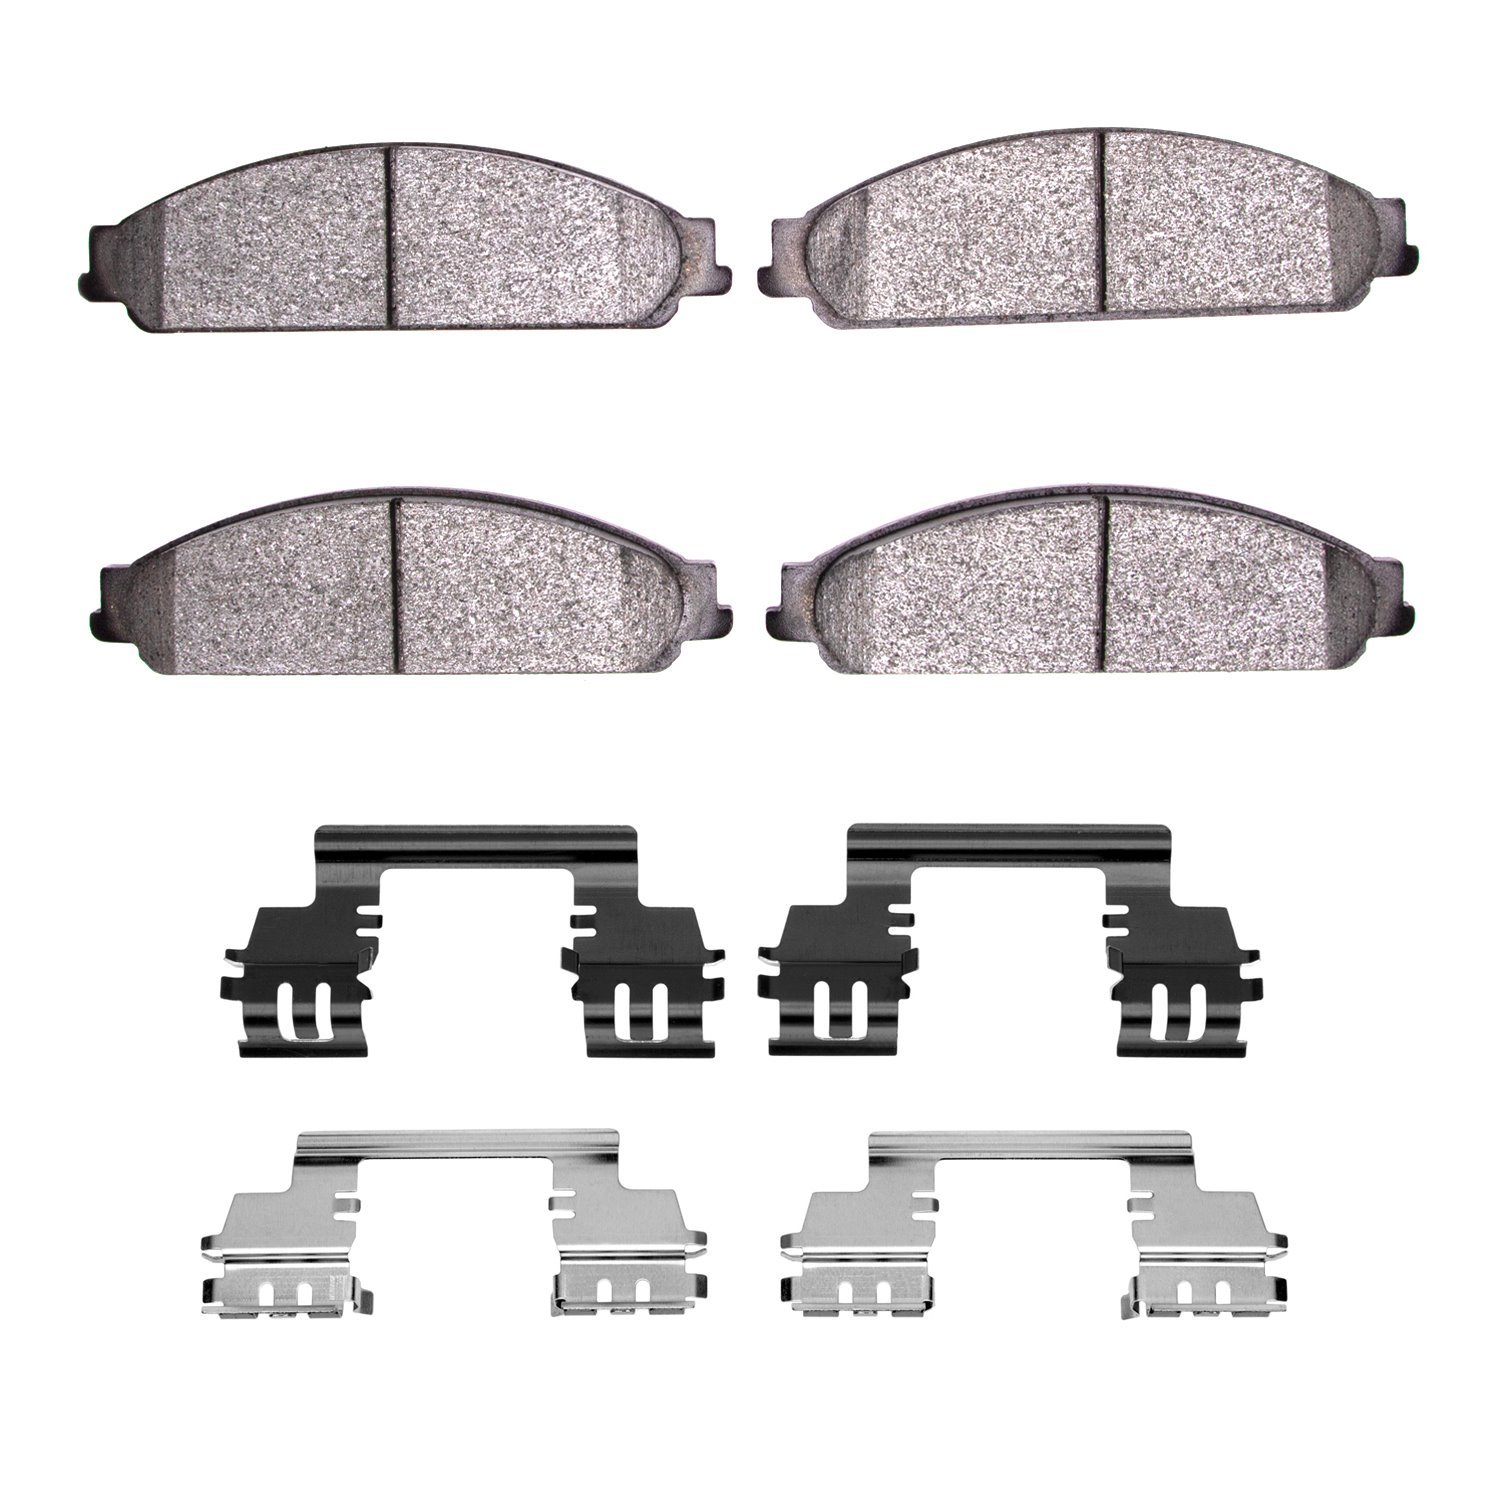 1551-1070-01 5000 Advanced Ceramic Brake Pads & Hardware Kit, 2008-2009 Ford/Lincoln/Mercury/Mazda, Position: Front